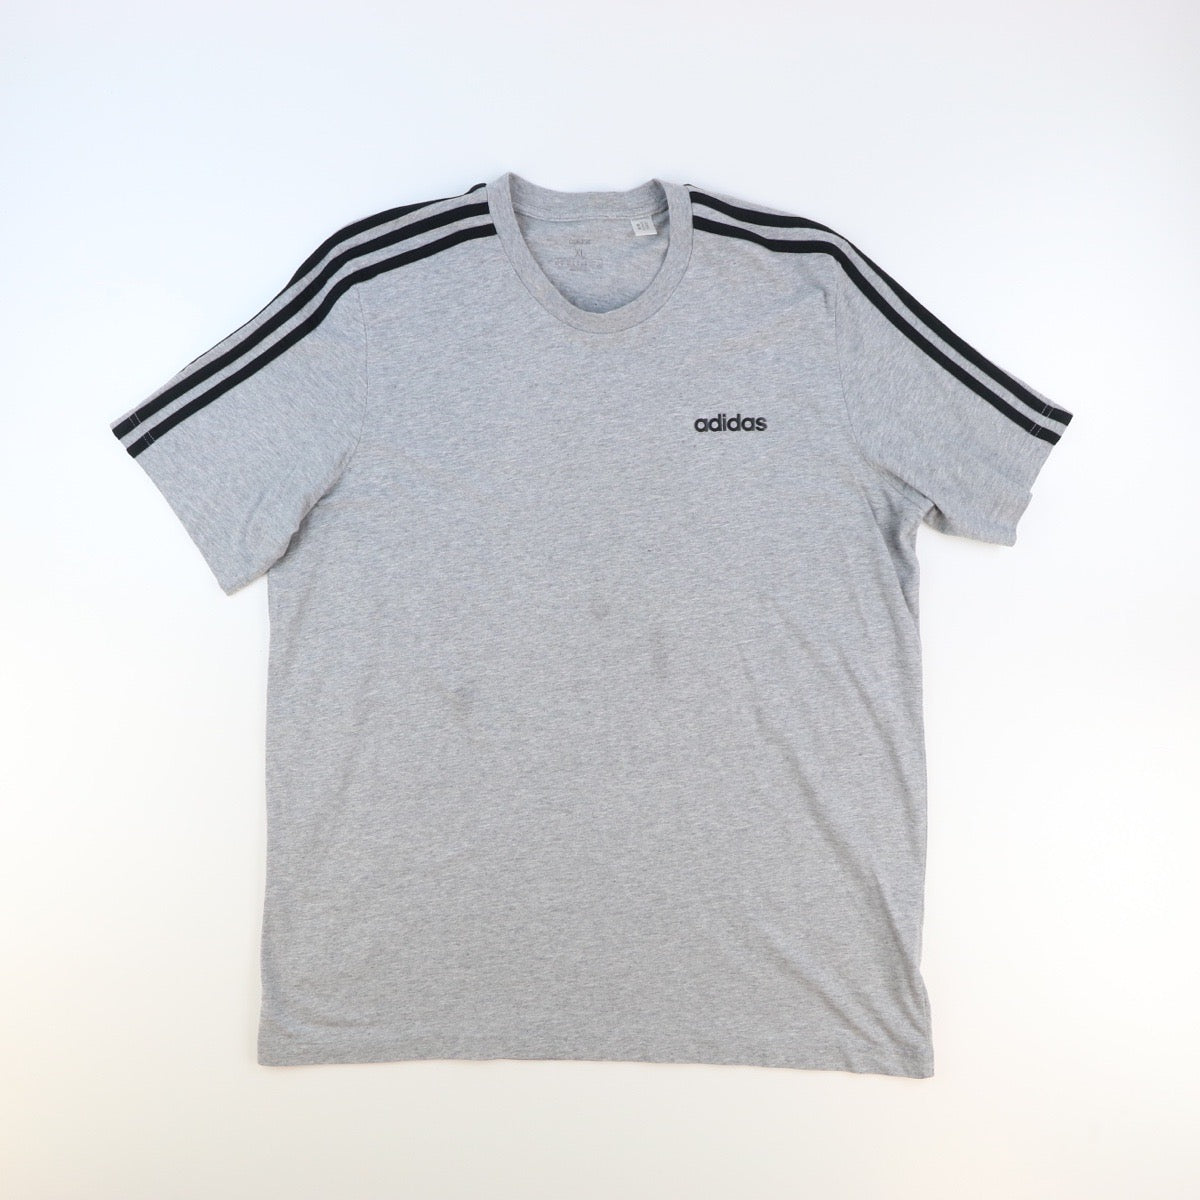 Adidas T shirt (XL)